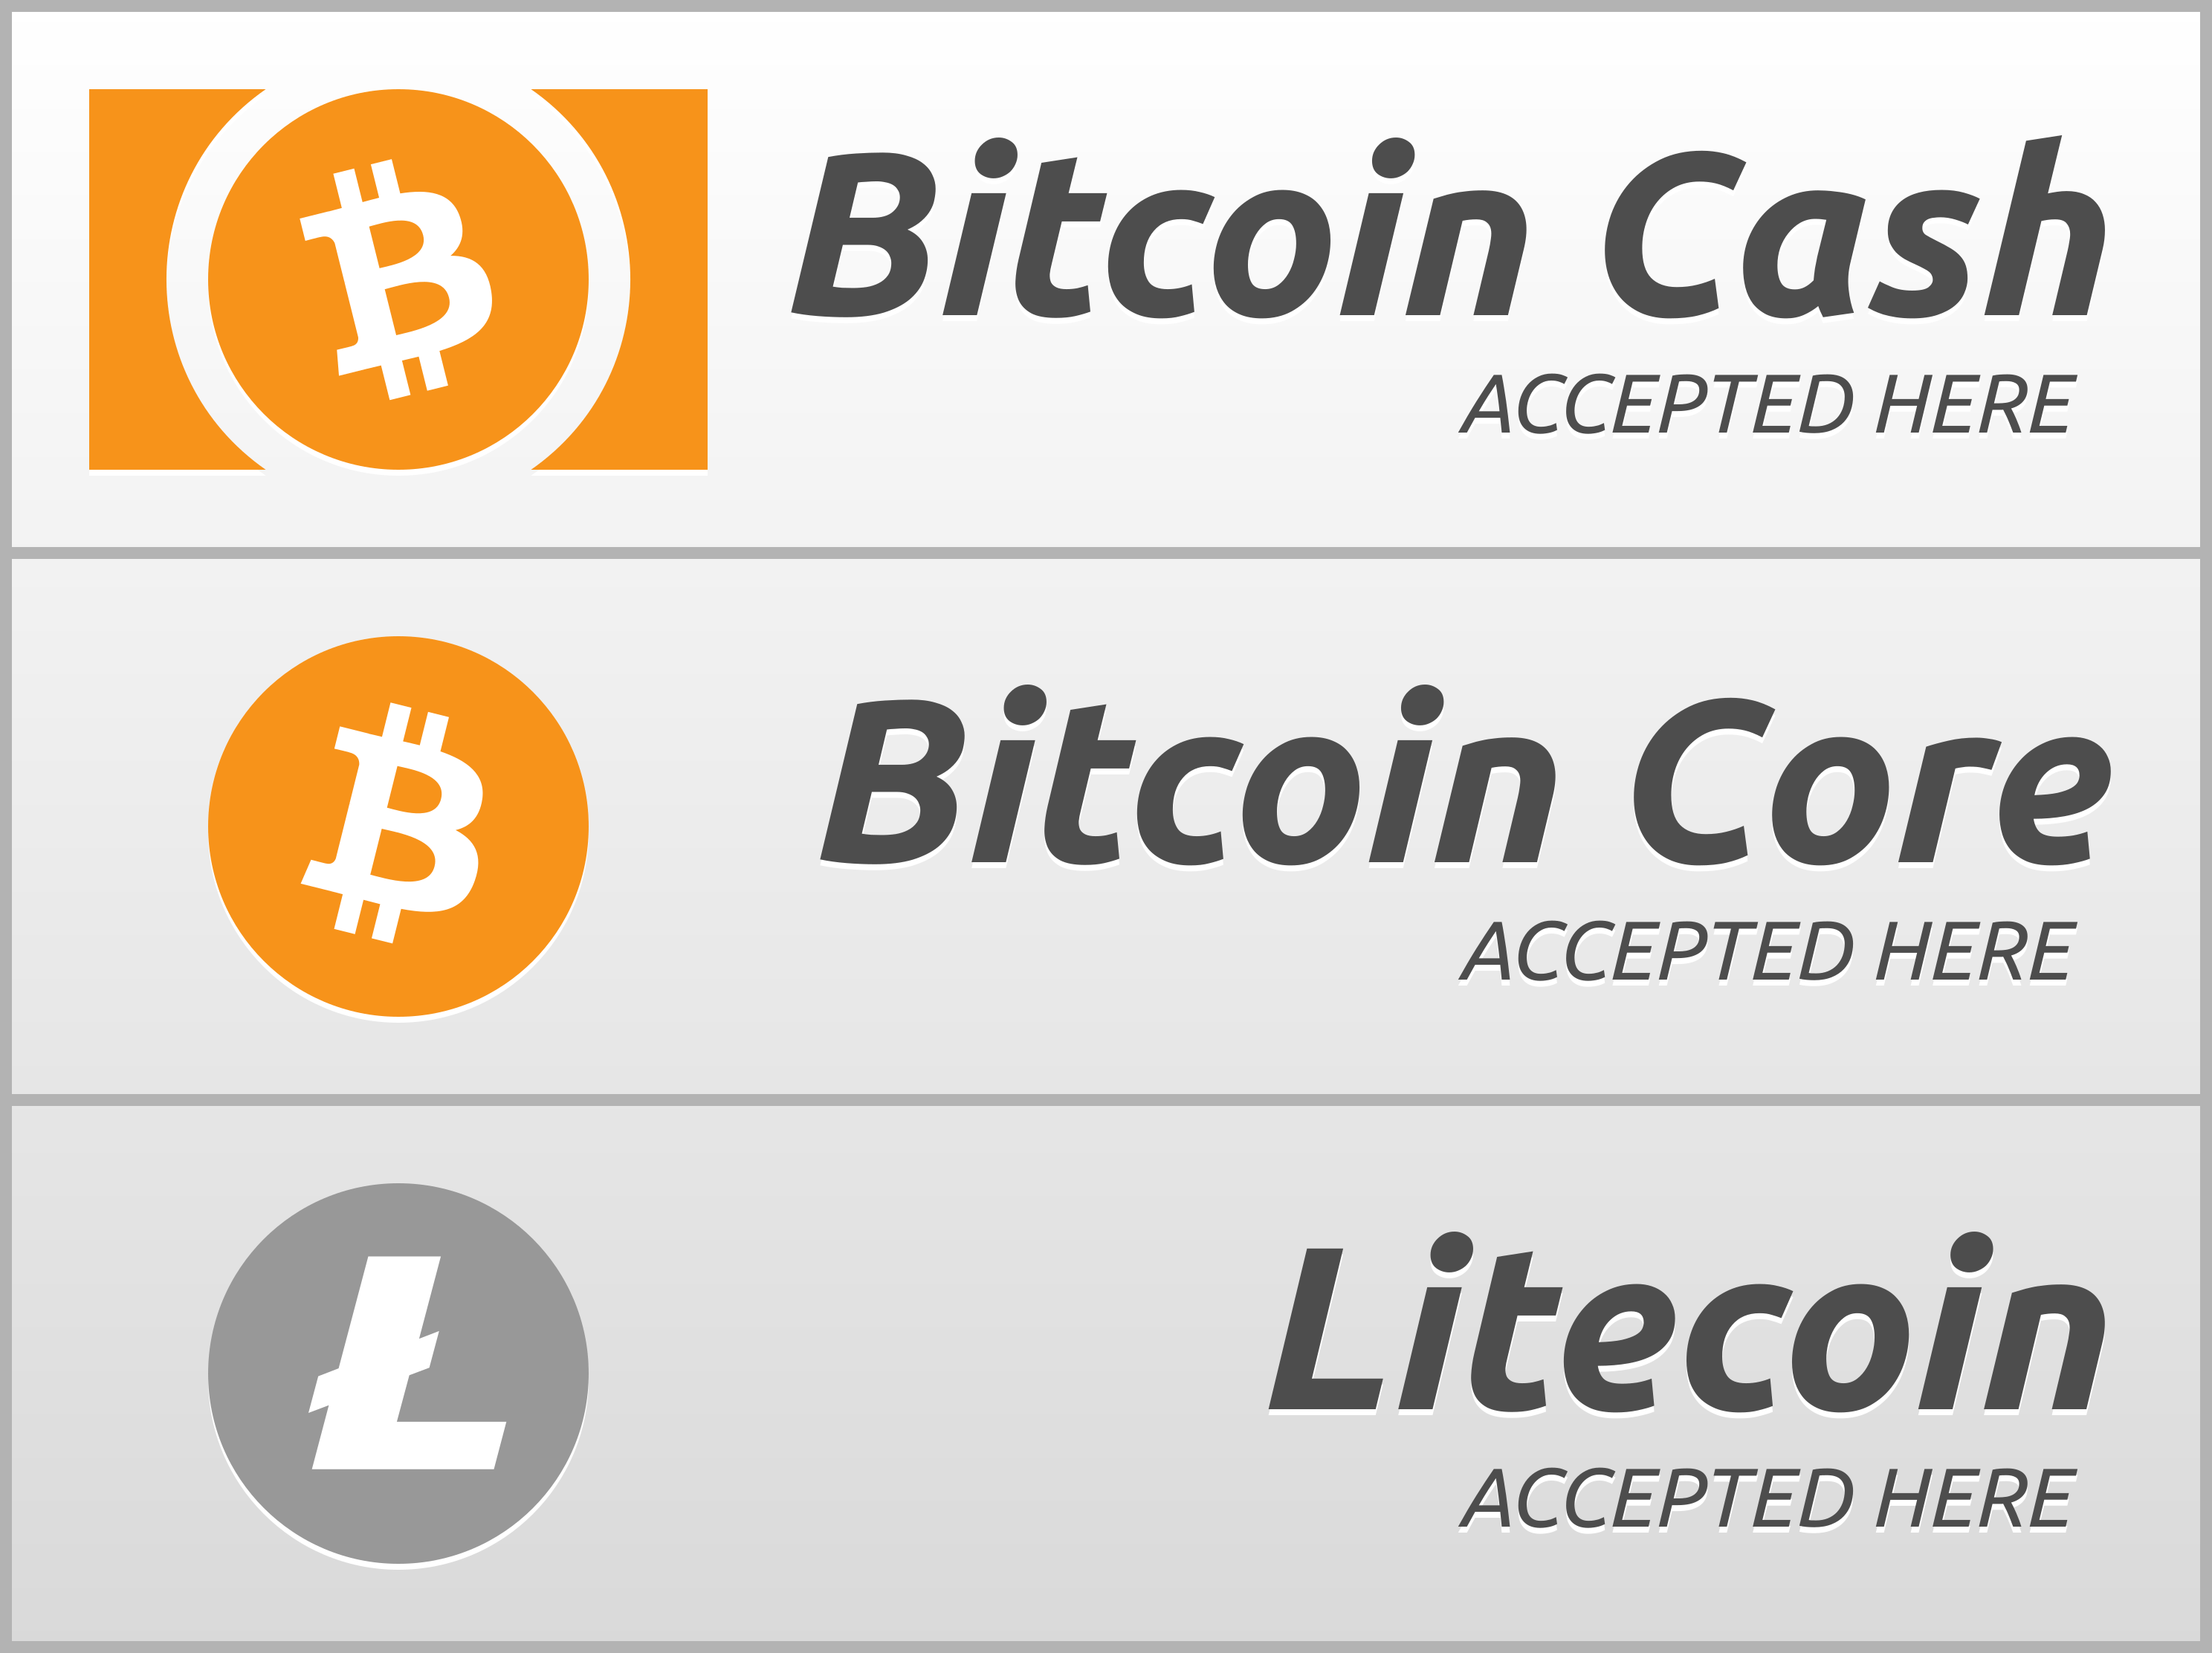 Cash Accepted Logo - Accept Large Bitcoincash Bitcoincore Litecoin Straight